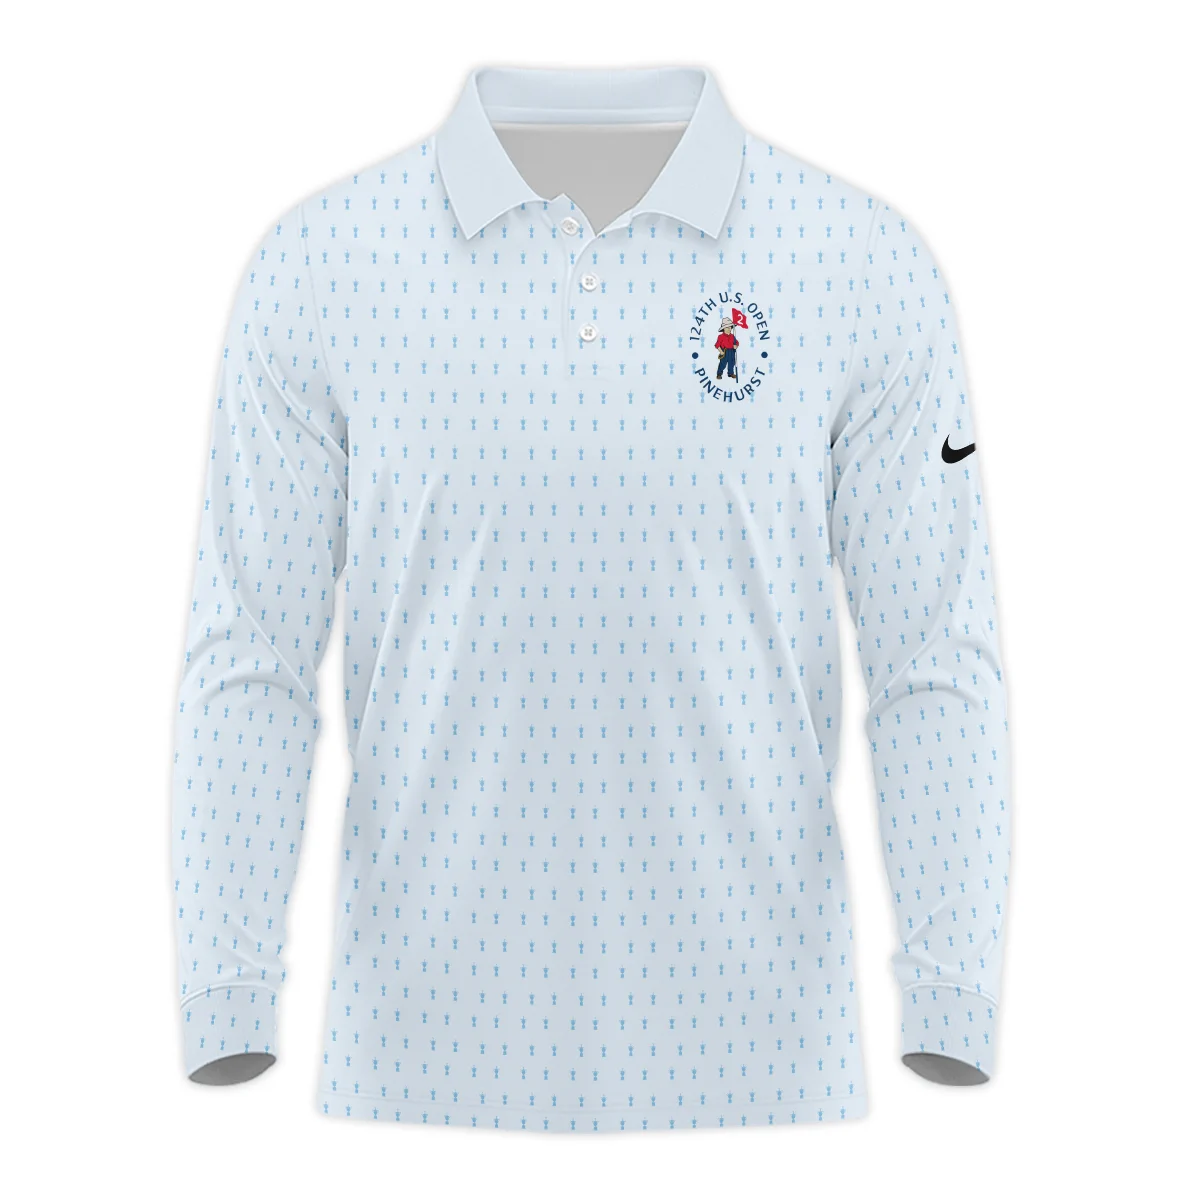 Golf Pattern Cup Light Blue Green 124th U.S. Open Pinehurst Nike Hoodie Shirt Style Classic Hoodie Shirt